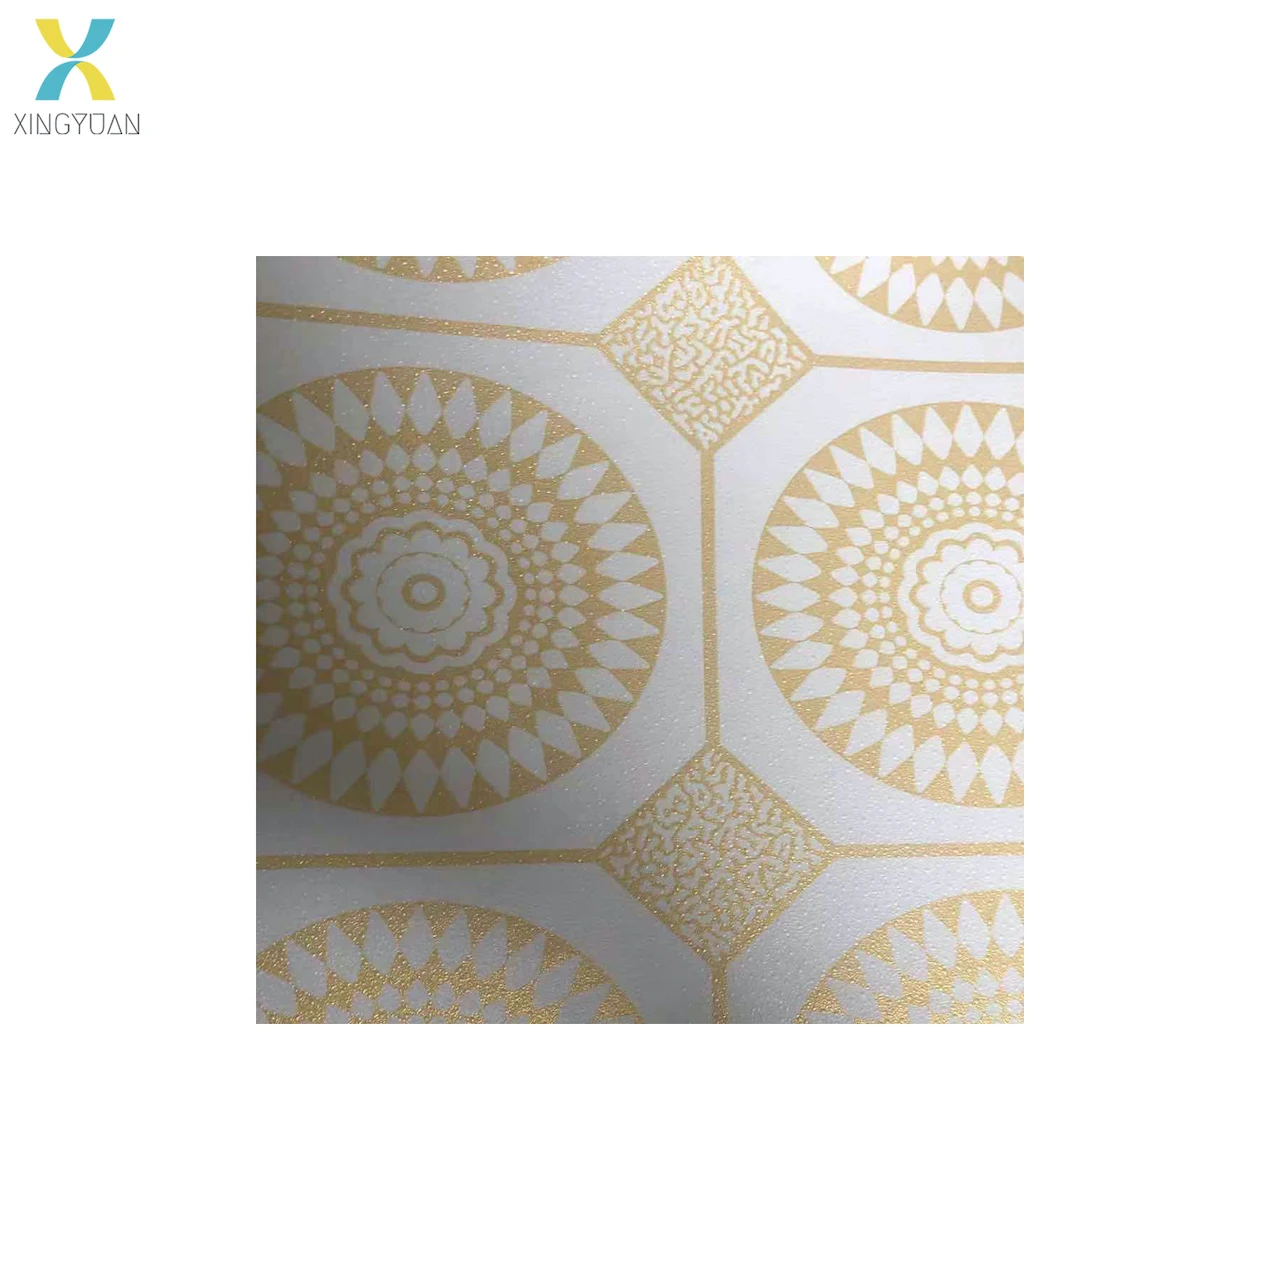 Shandong gypsum ceiling tile lamination embossed pattern pvc foil